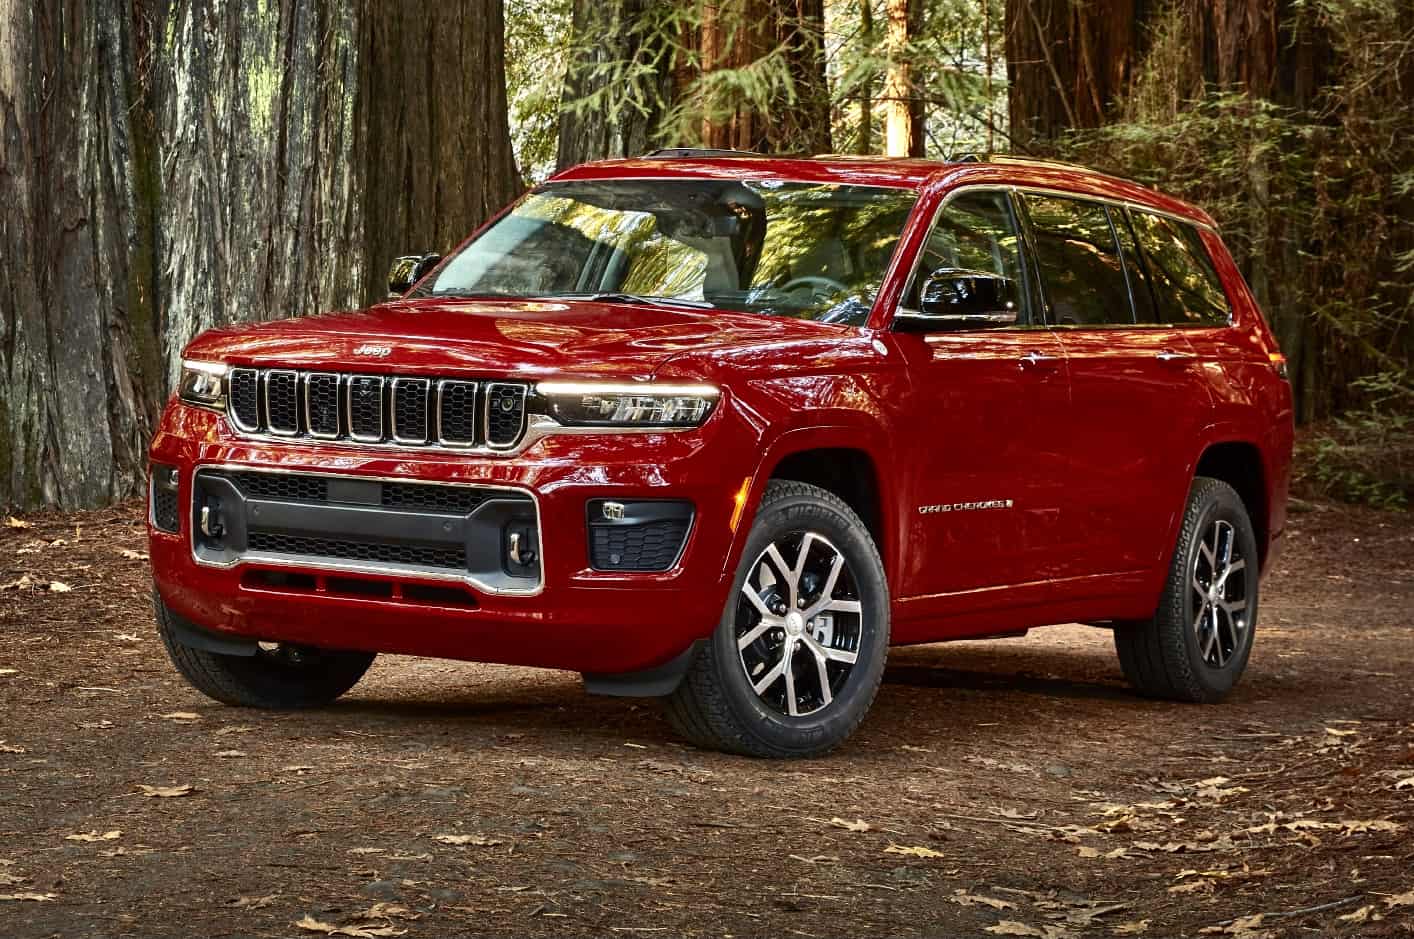 Jeep launches nextgeneration Grand Cherokee